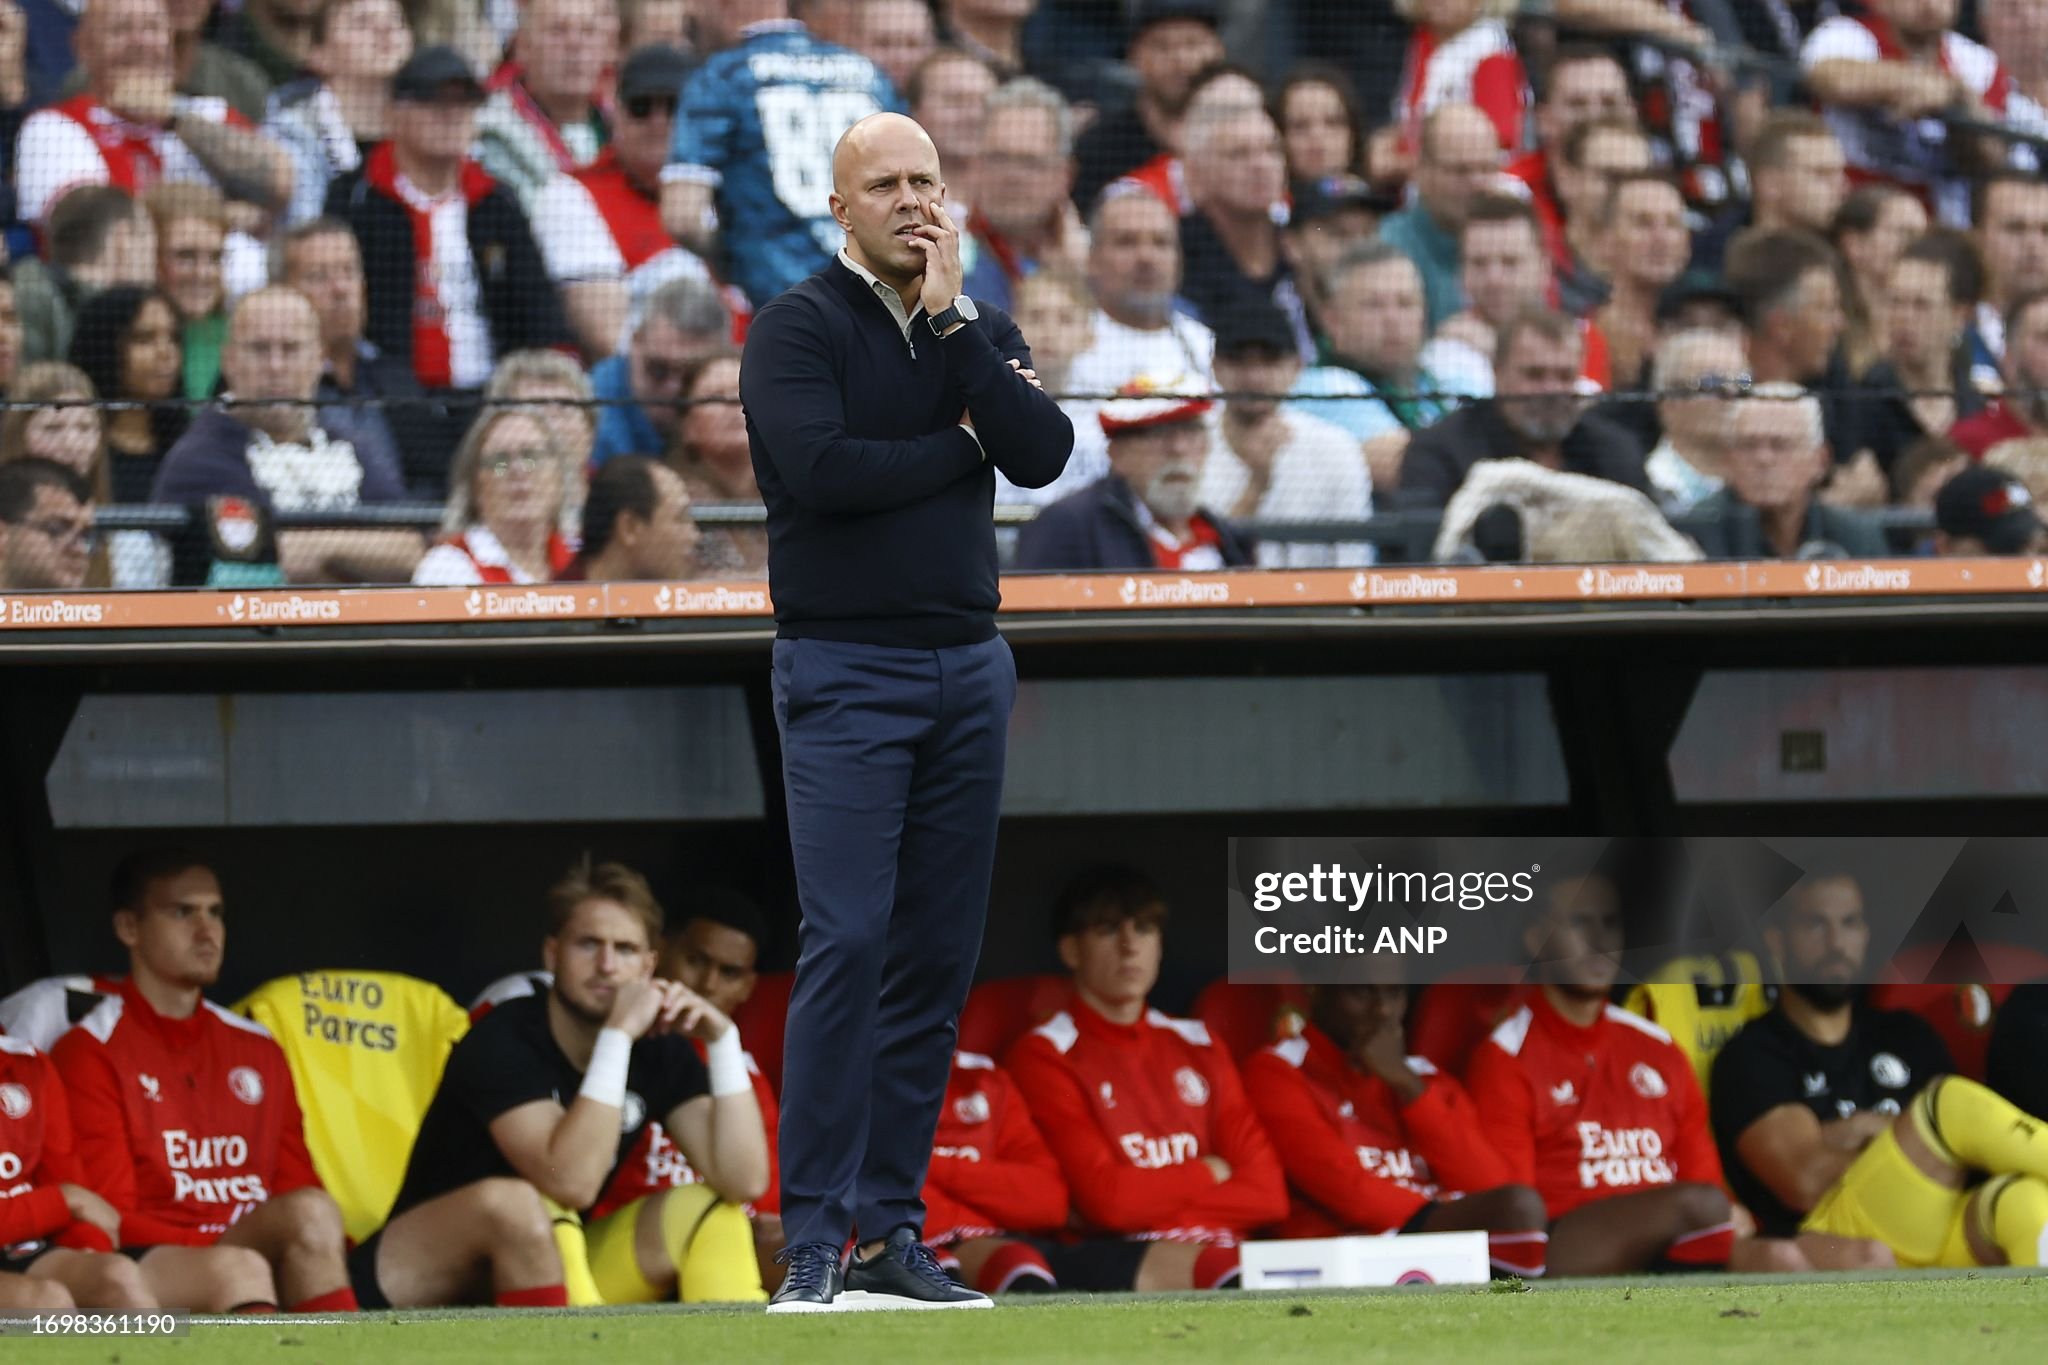 Slot: 'Haven't often sat so calmly on the bench as Feyenoord coach'